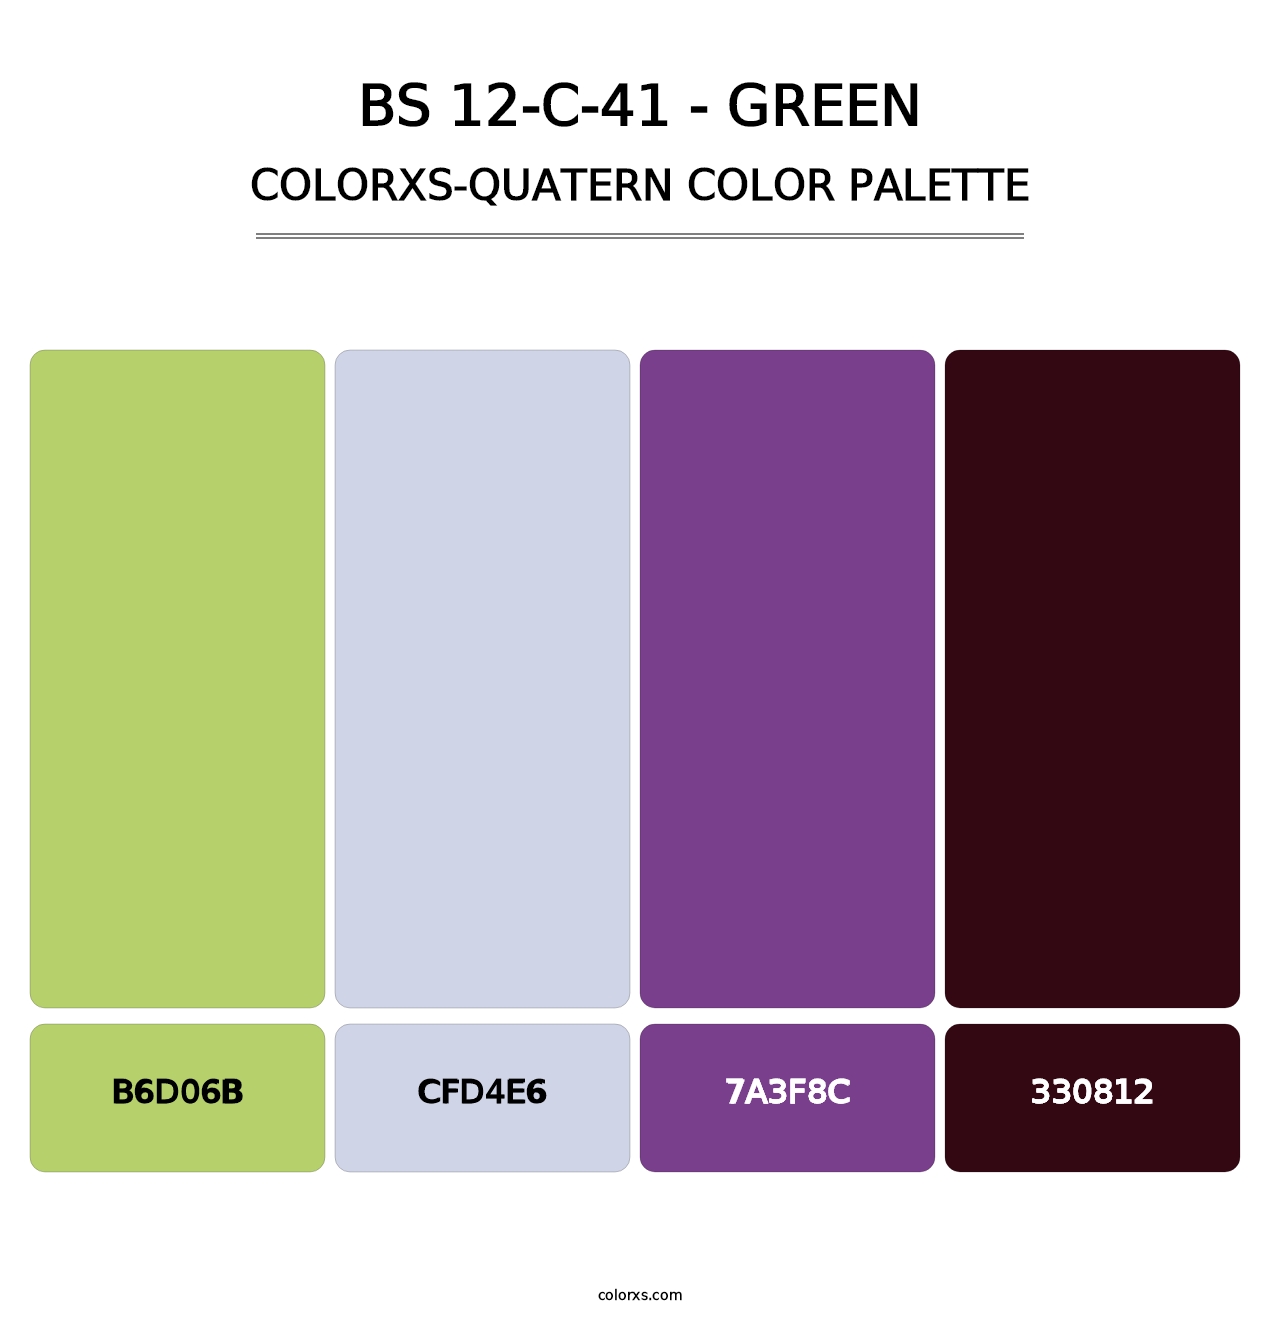 BS 12-C-41 - Green - Colorxs Quatern Palette